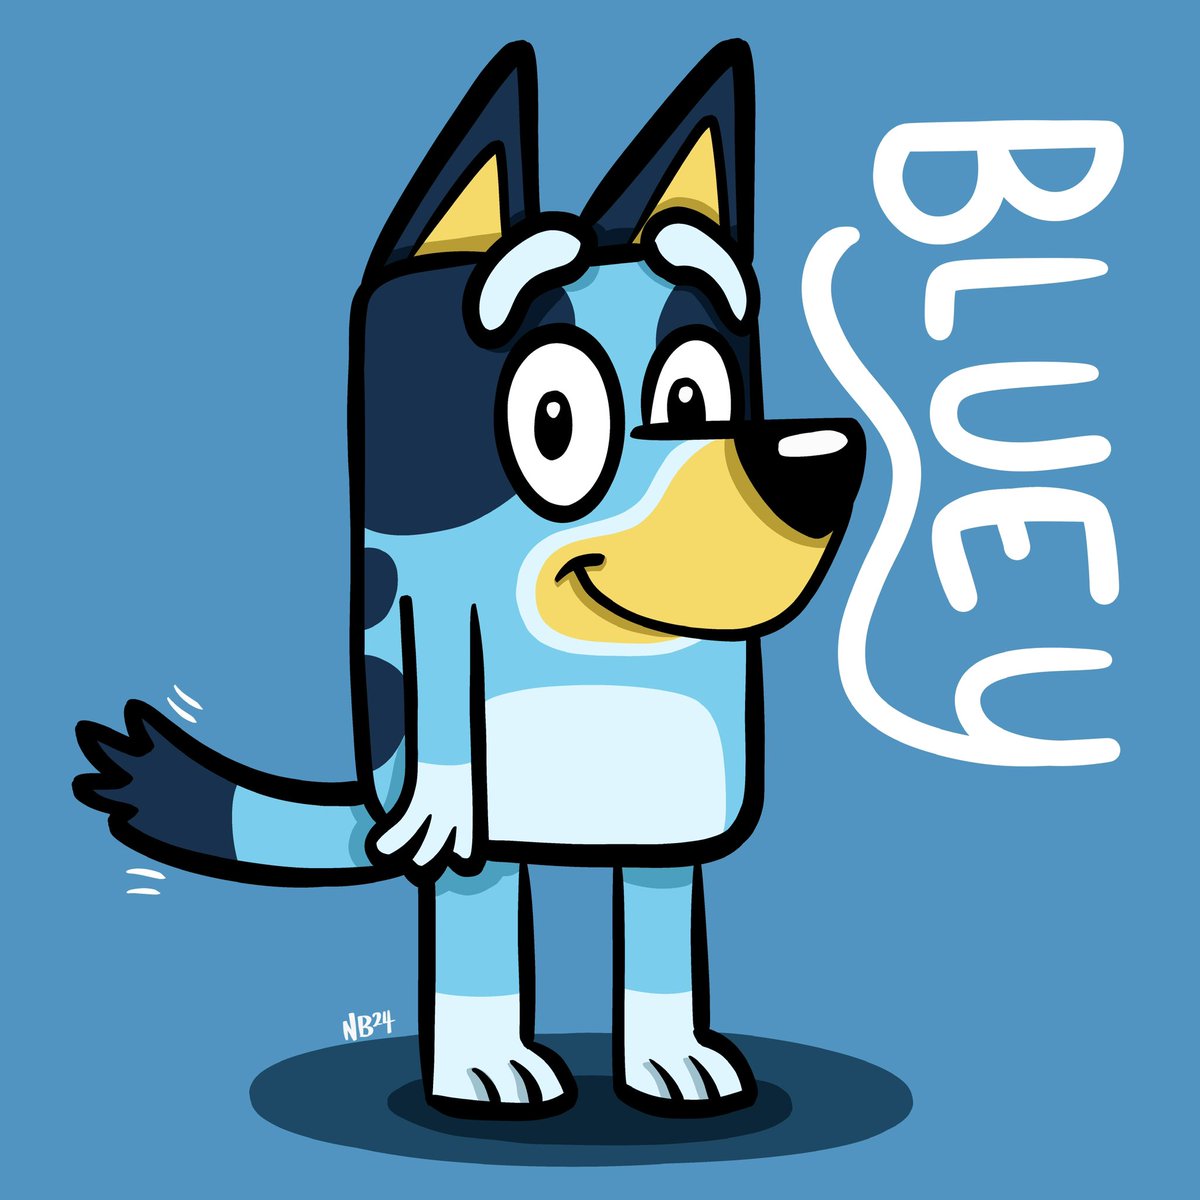 A bit of Bluey fan art! @OfficialBlueyTV